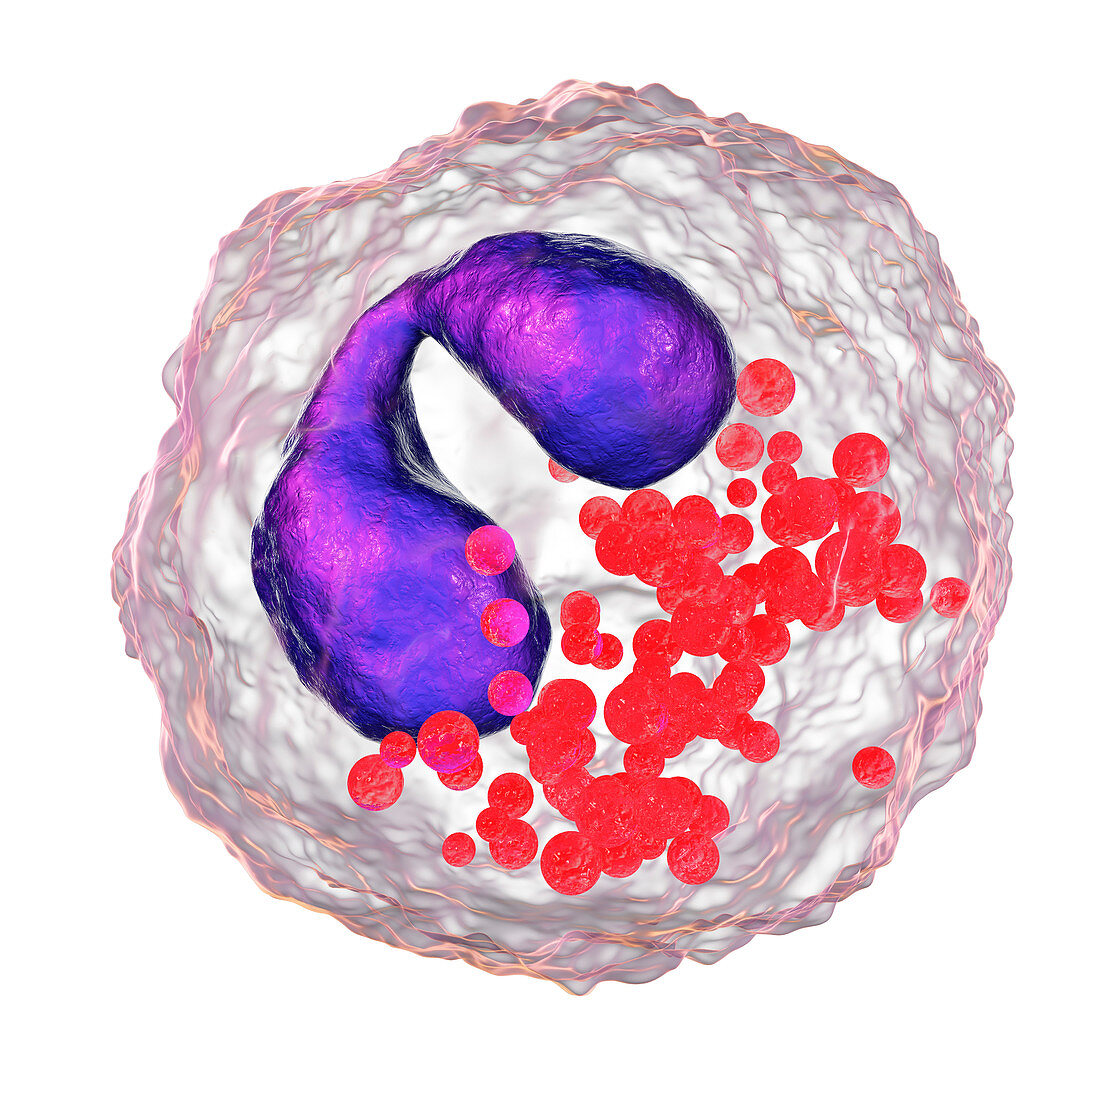 Eosinophil white blood cell, illustration